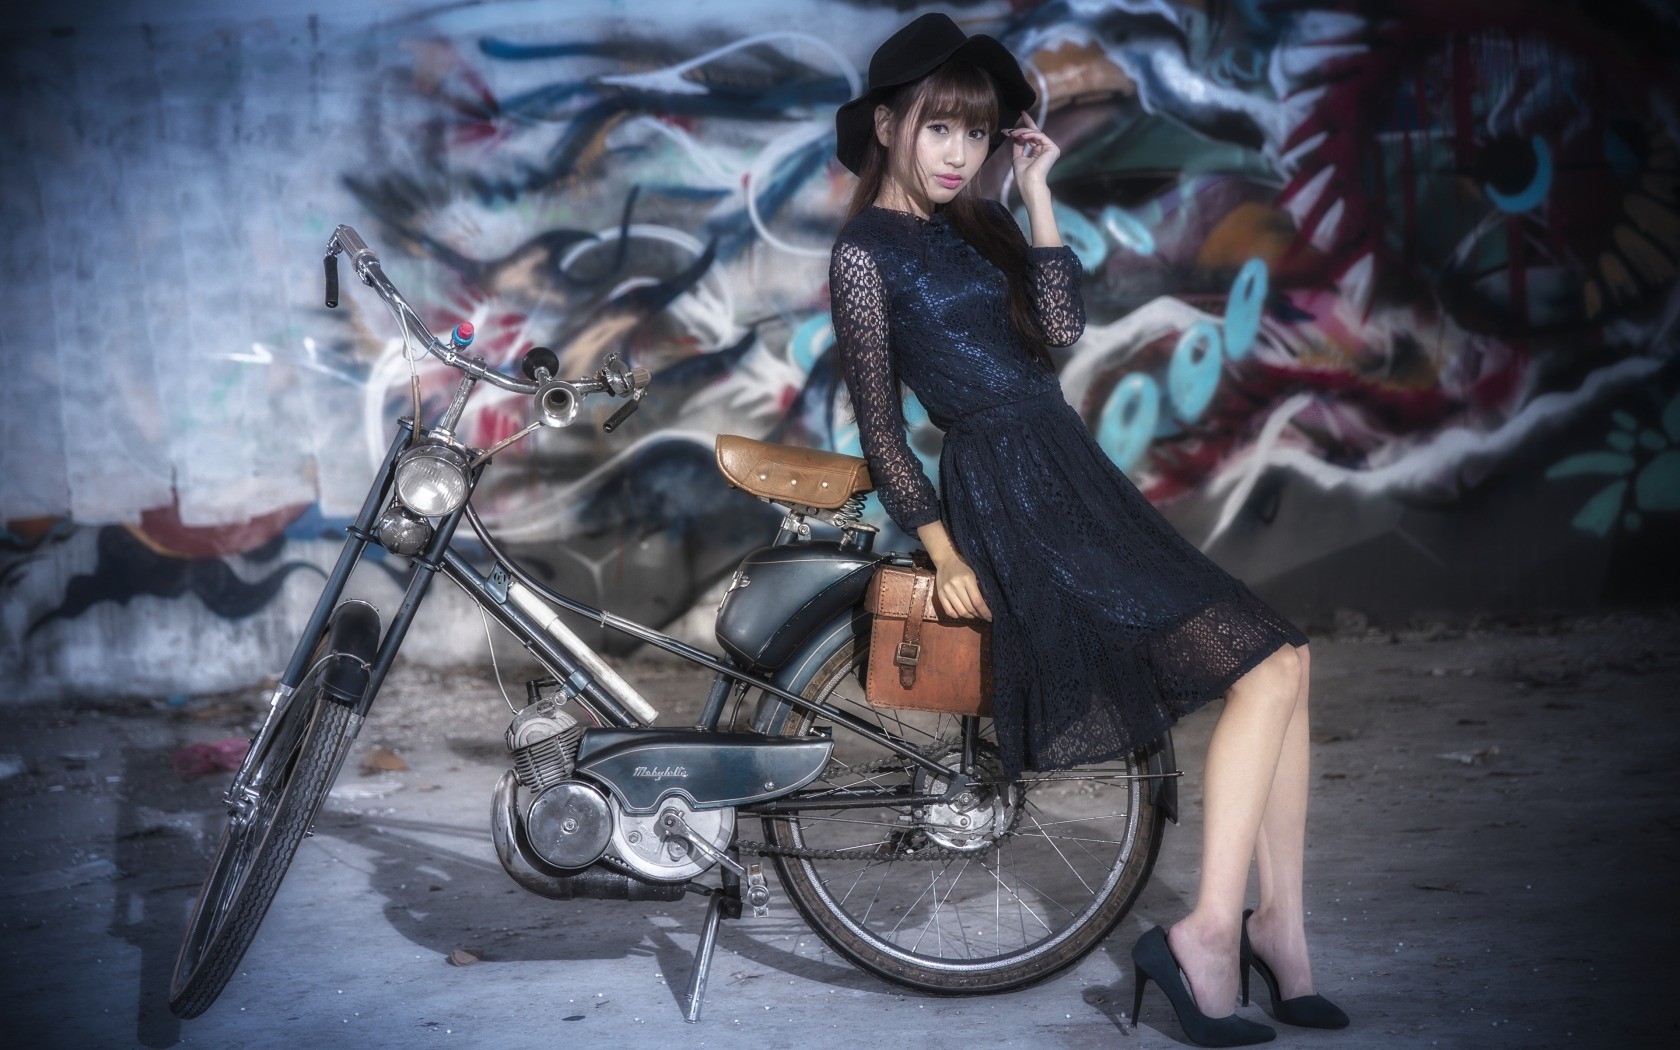 People 1680x1050 bicycle Asian women model high heels women with bicycles hat women with hats heels dress vehicle